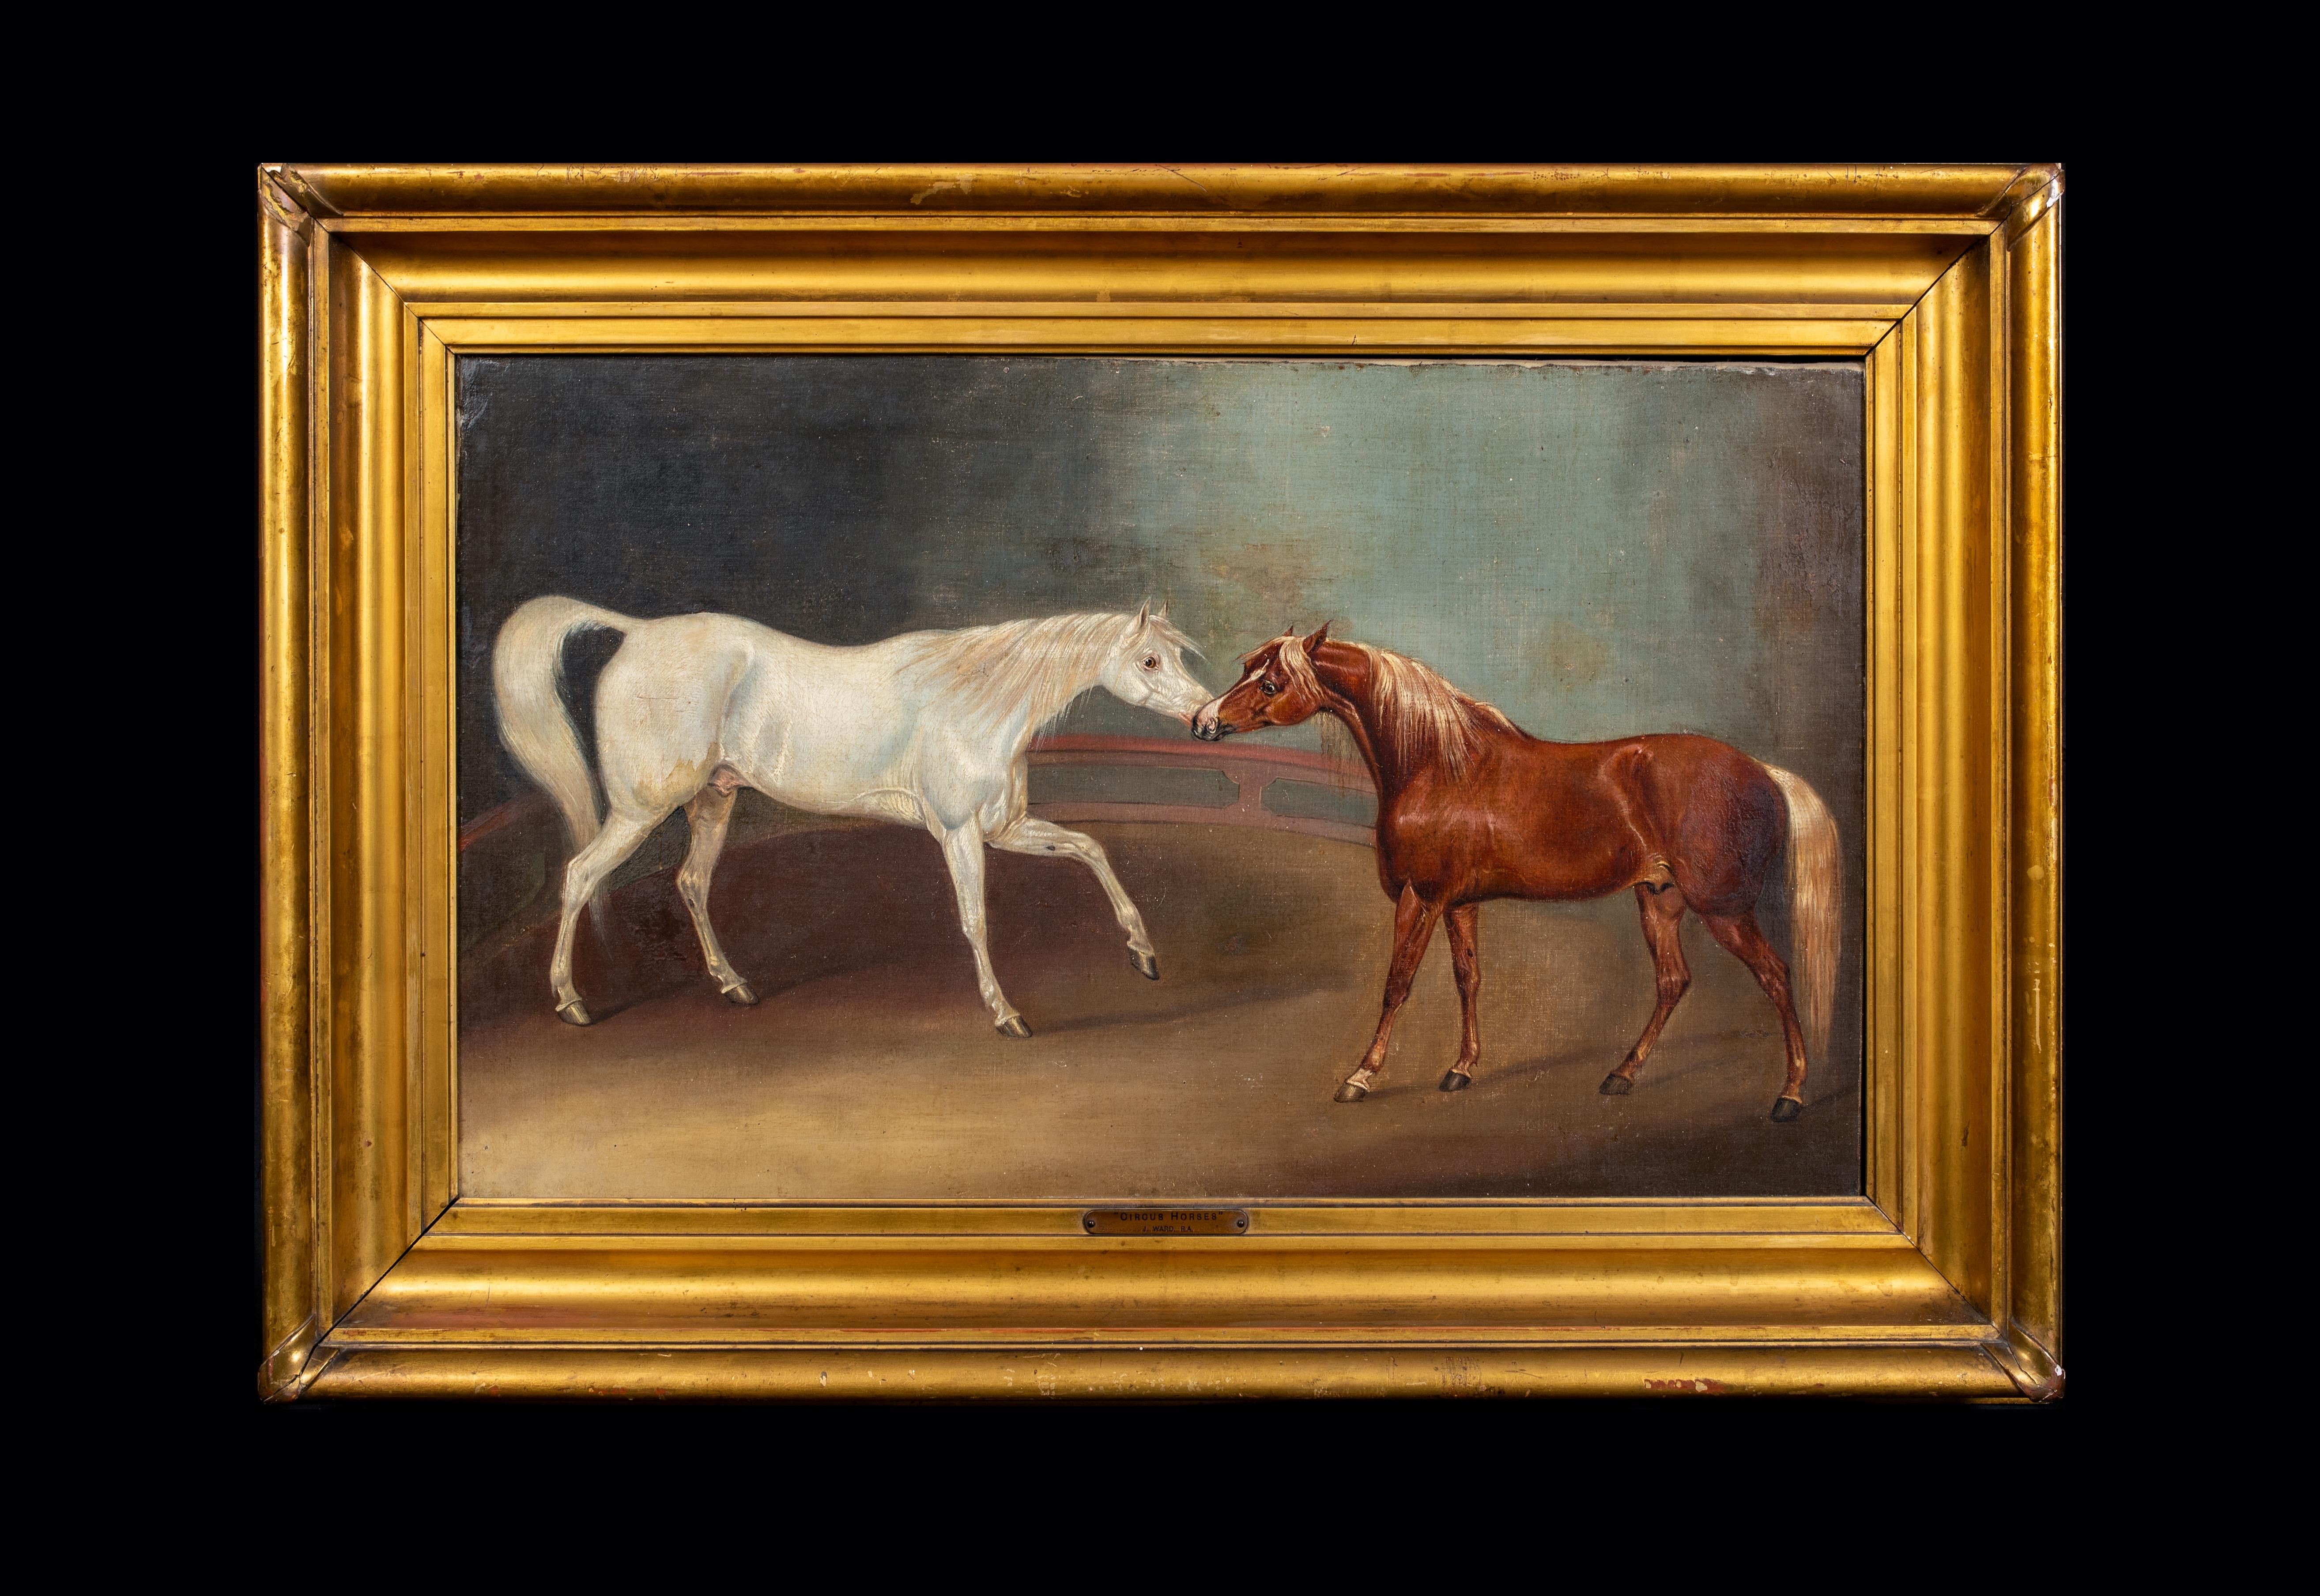 Circus Horses, 19th Century  by James WARD (1769-1859)  - Painting by James Ward